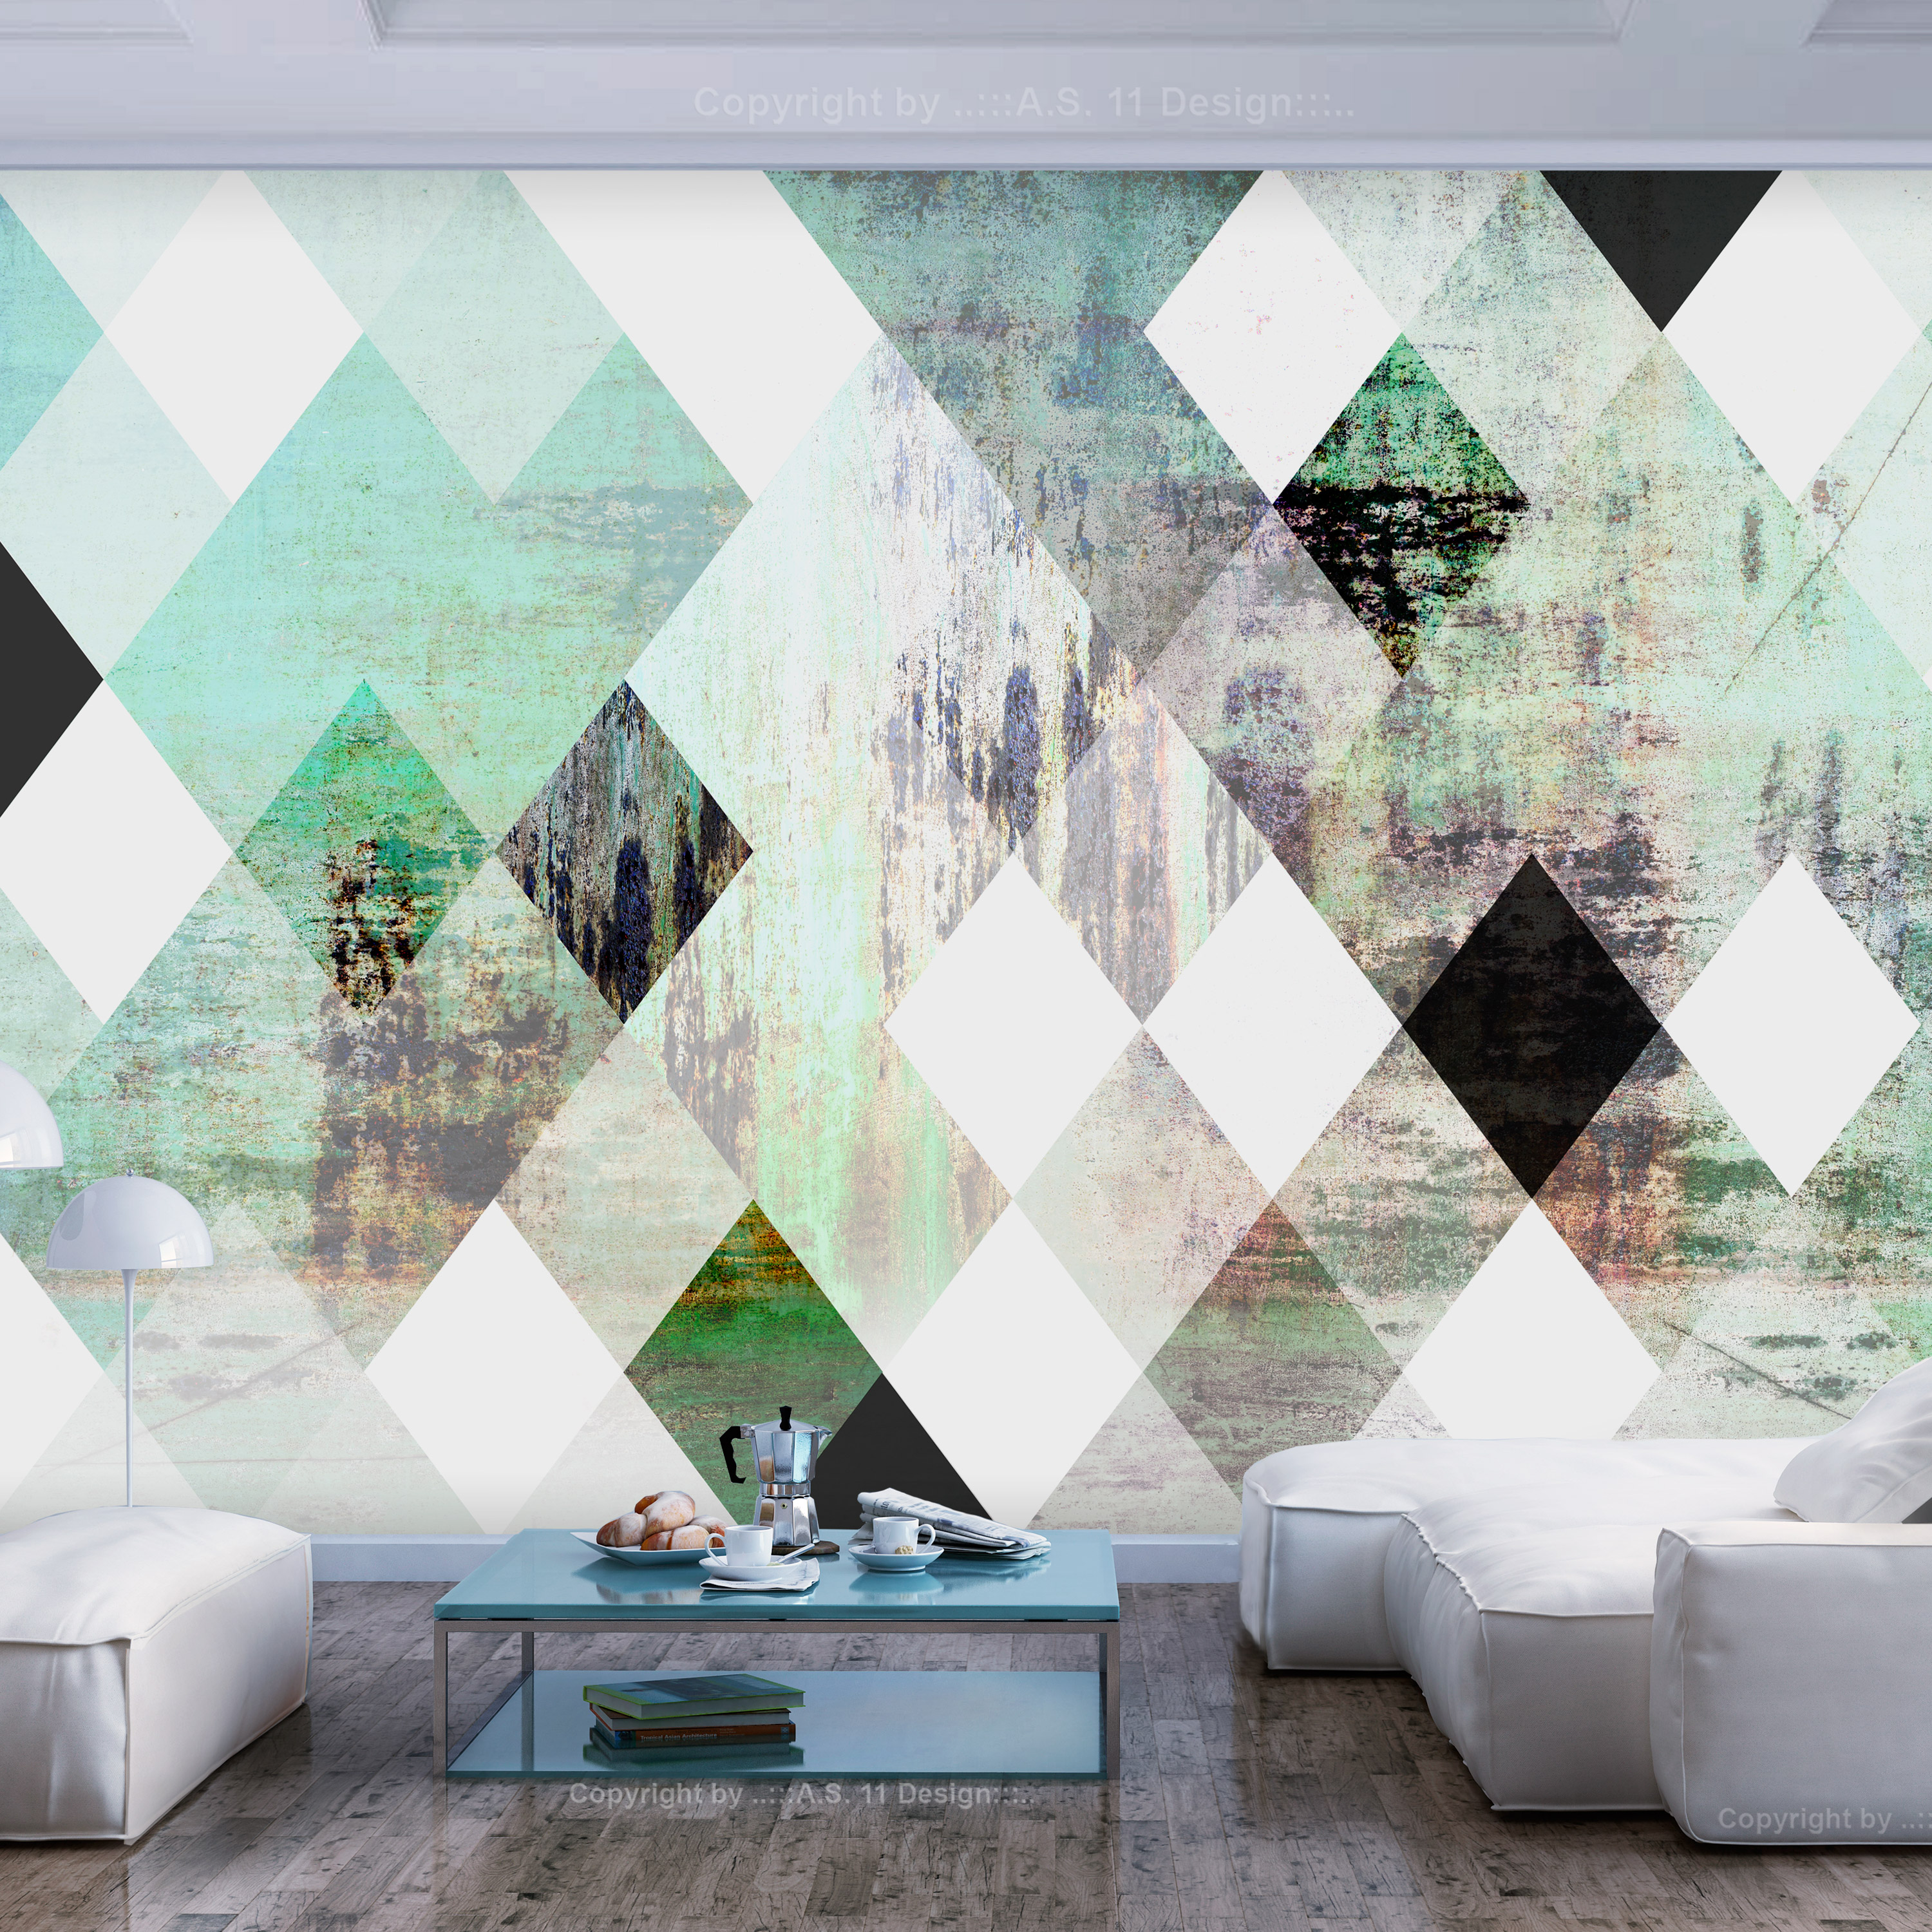 Self-adhesive Wallpaper - Rhombic Chessboard (Green) - 294x210